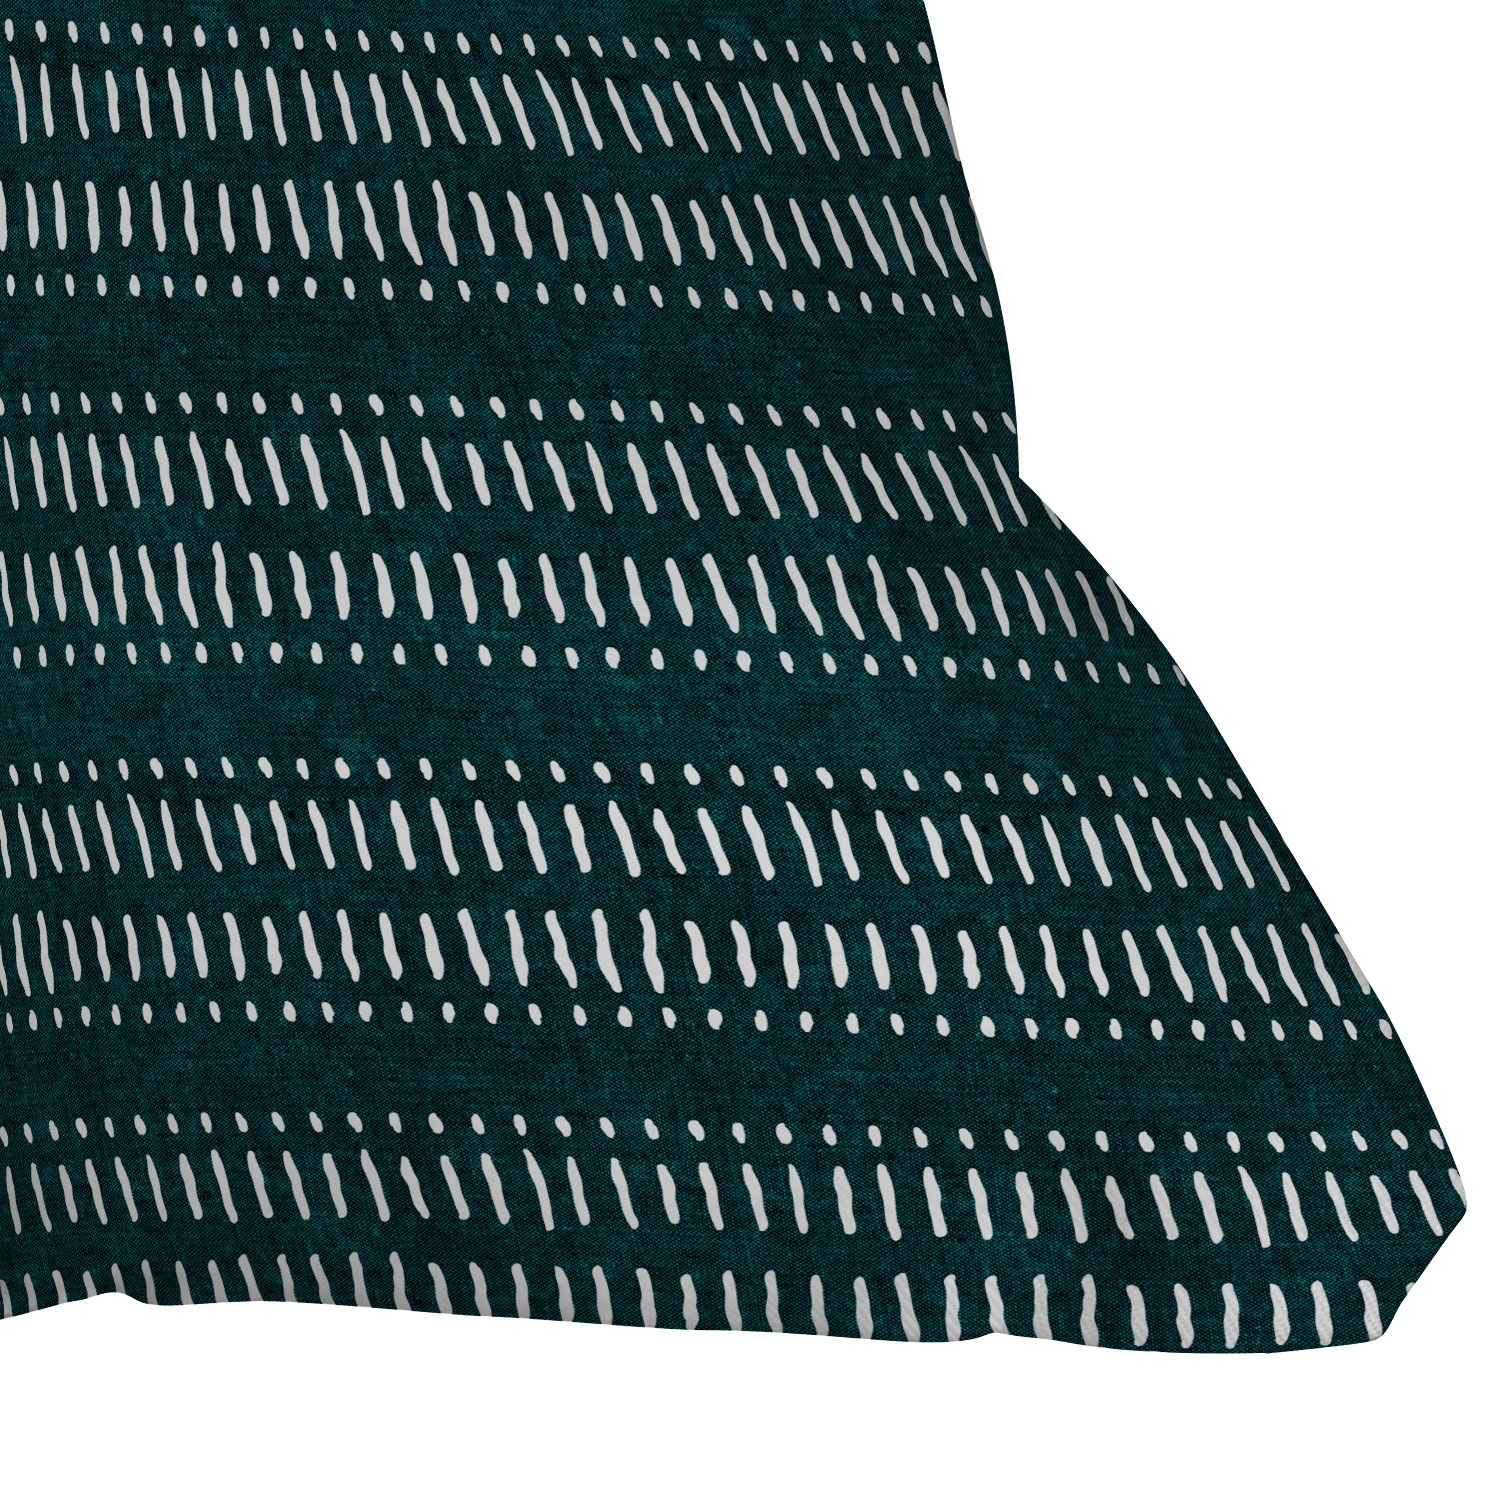 Dash Dot Stripes Dark Teal by Little Arrow Design Co - Outdoor Throw Pillow 16" x 16" - Image 2